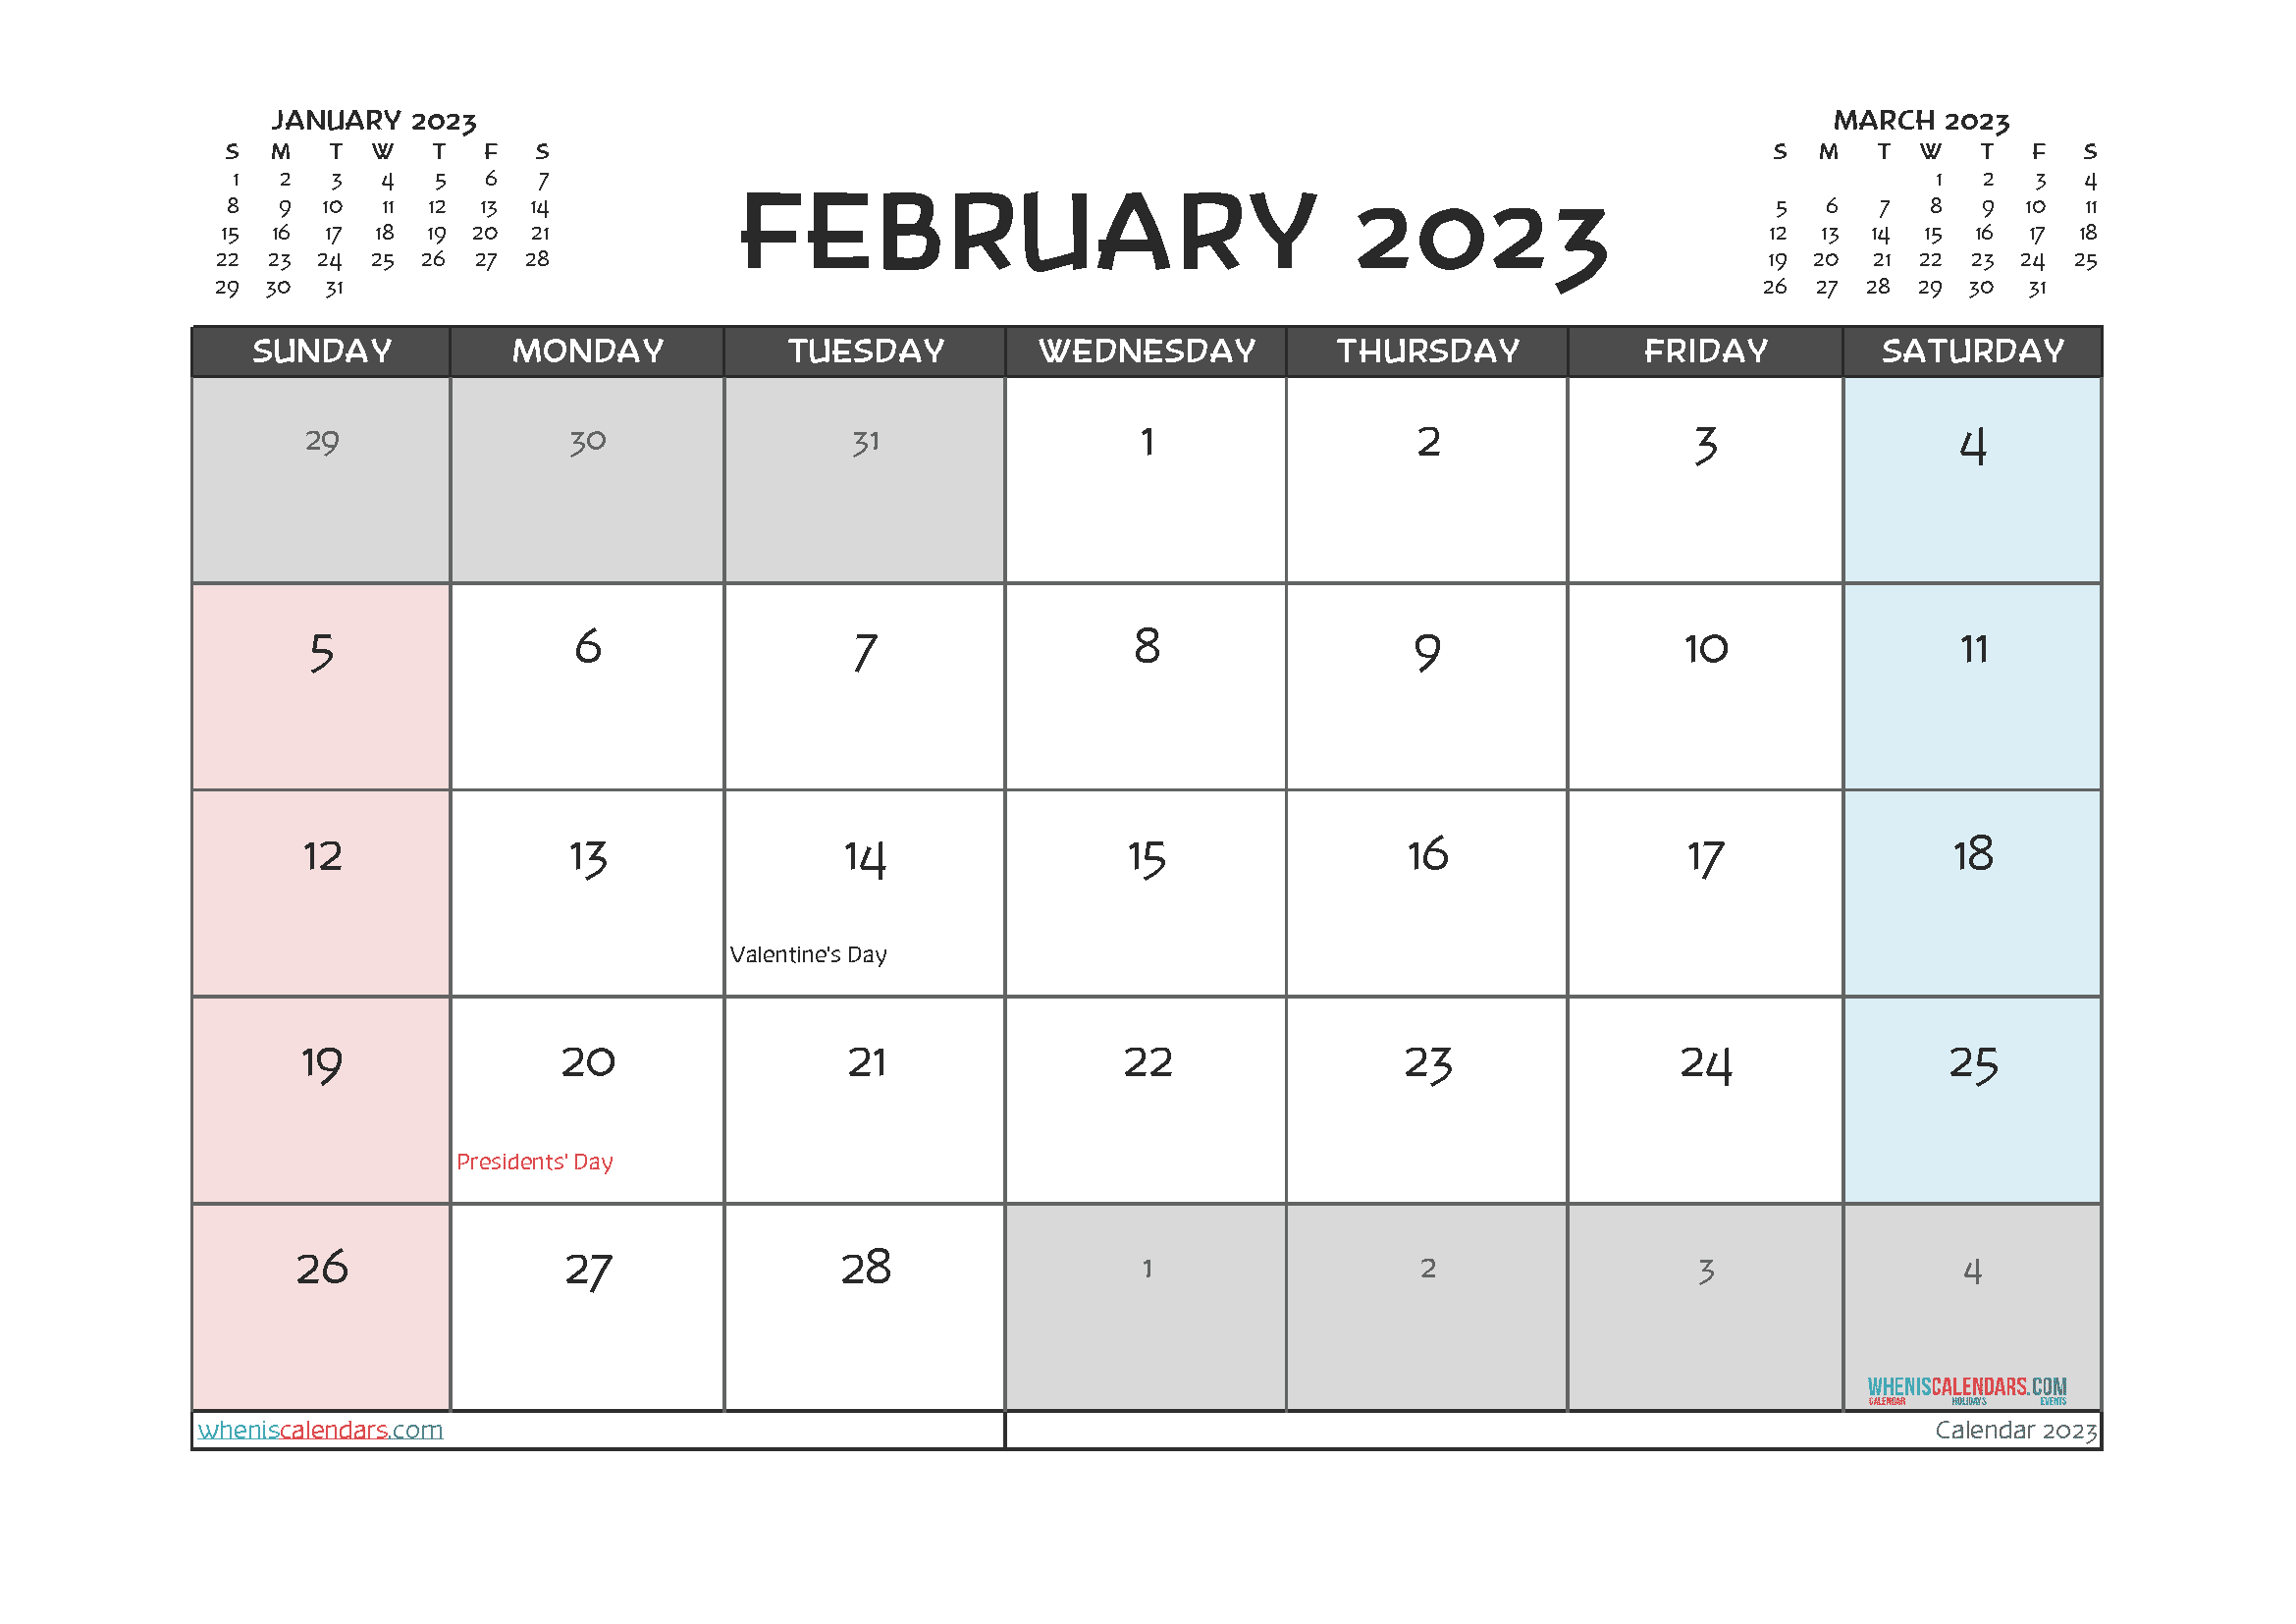 February 2023 Calendar with Holidays Free